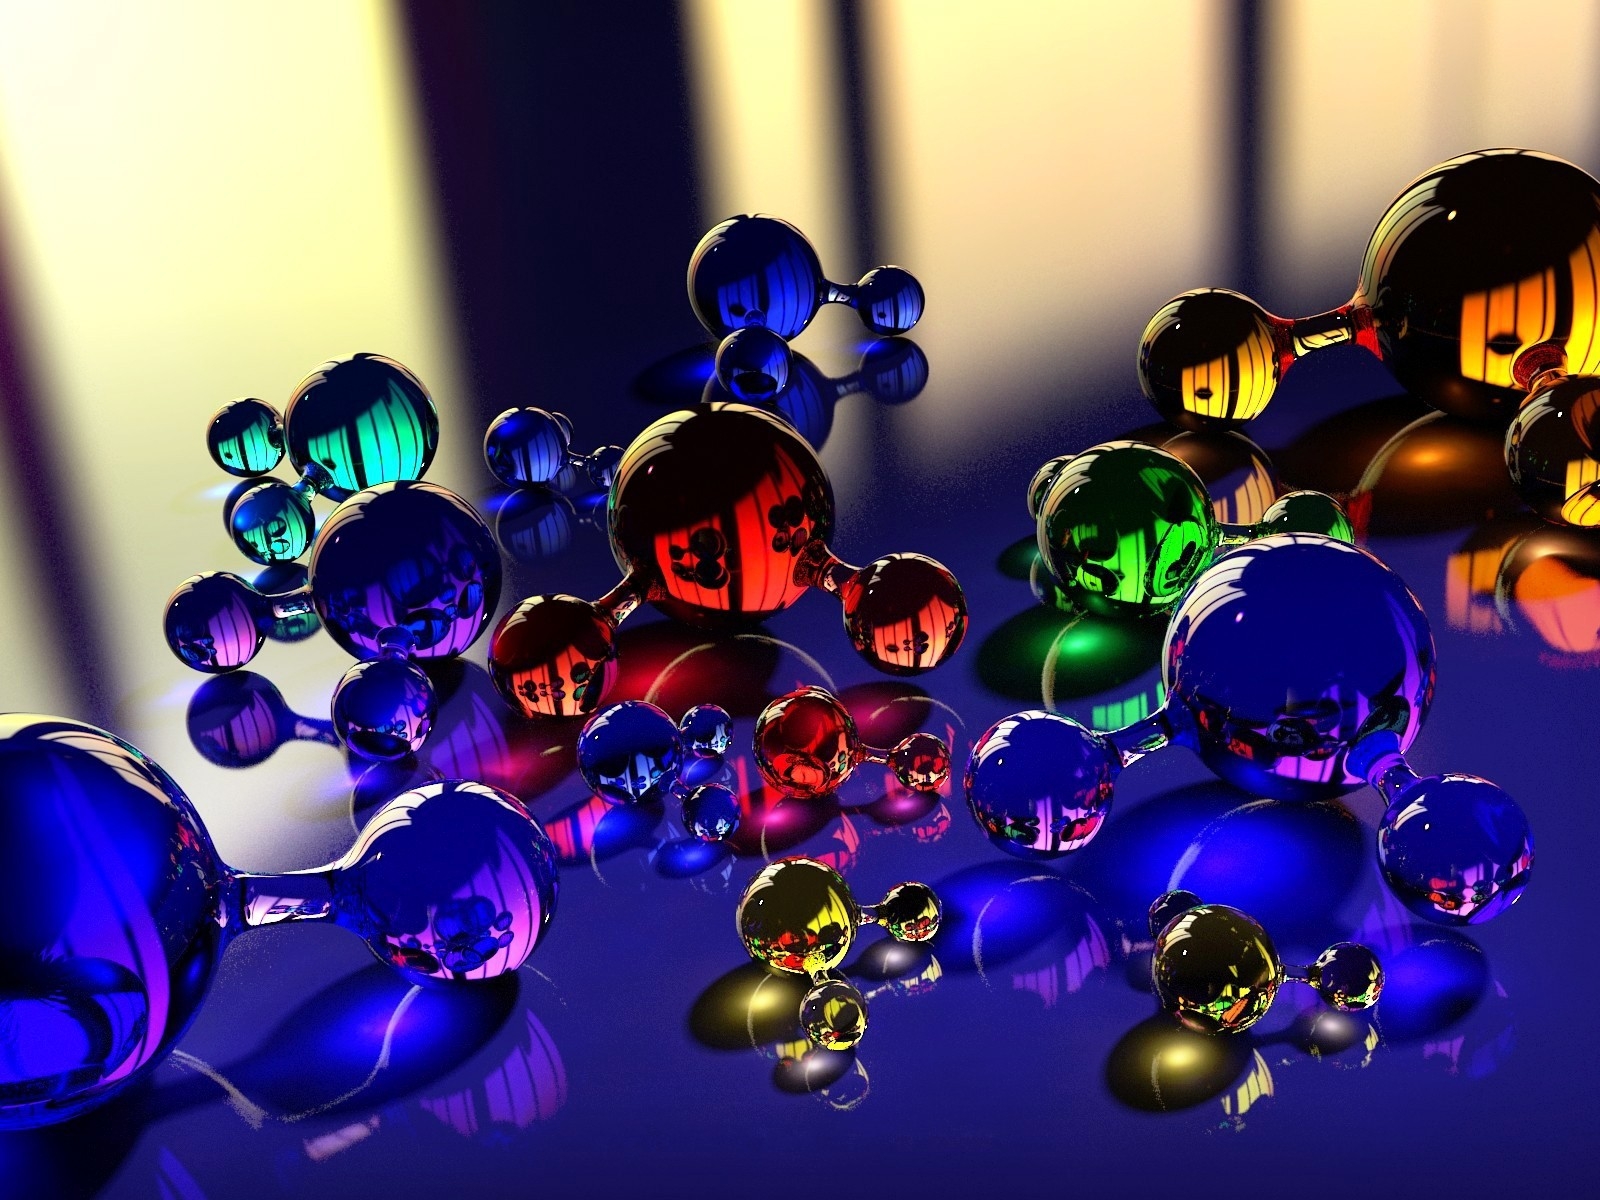 Molecule Stress Ball for 1600 x 1200 resolution